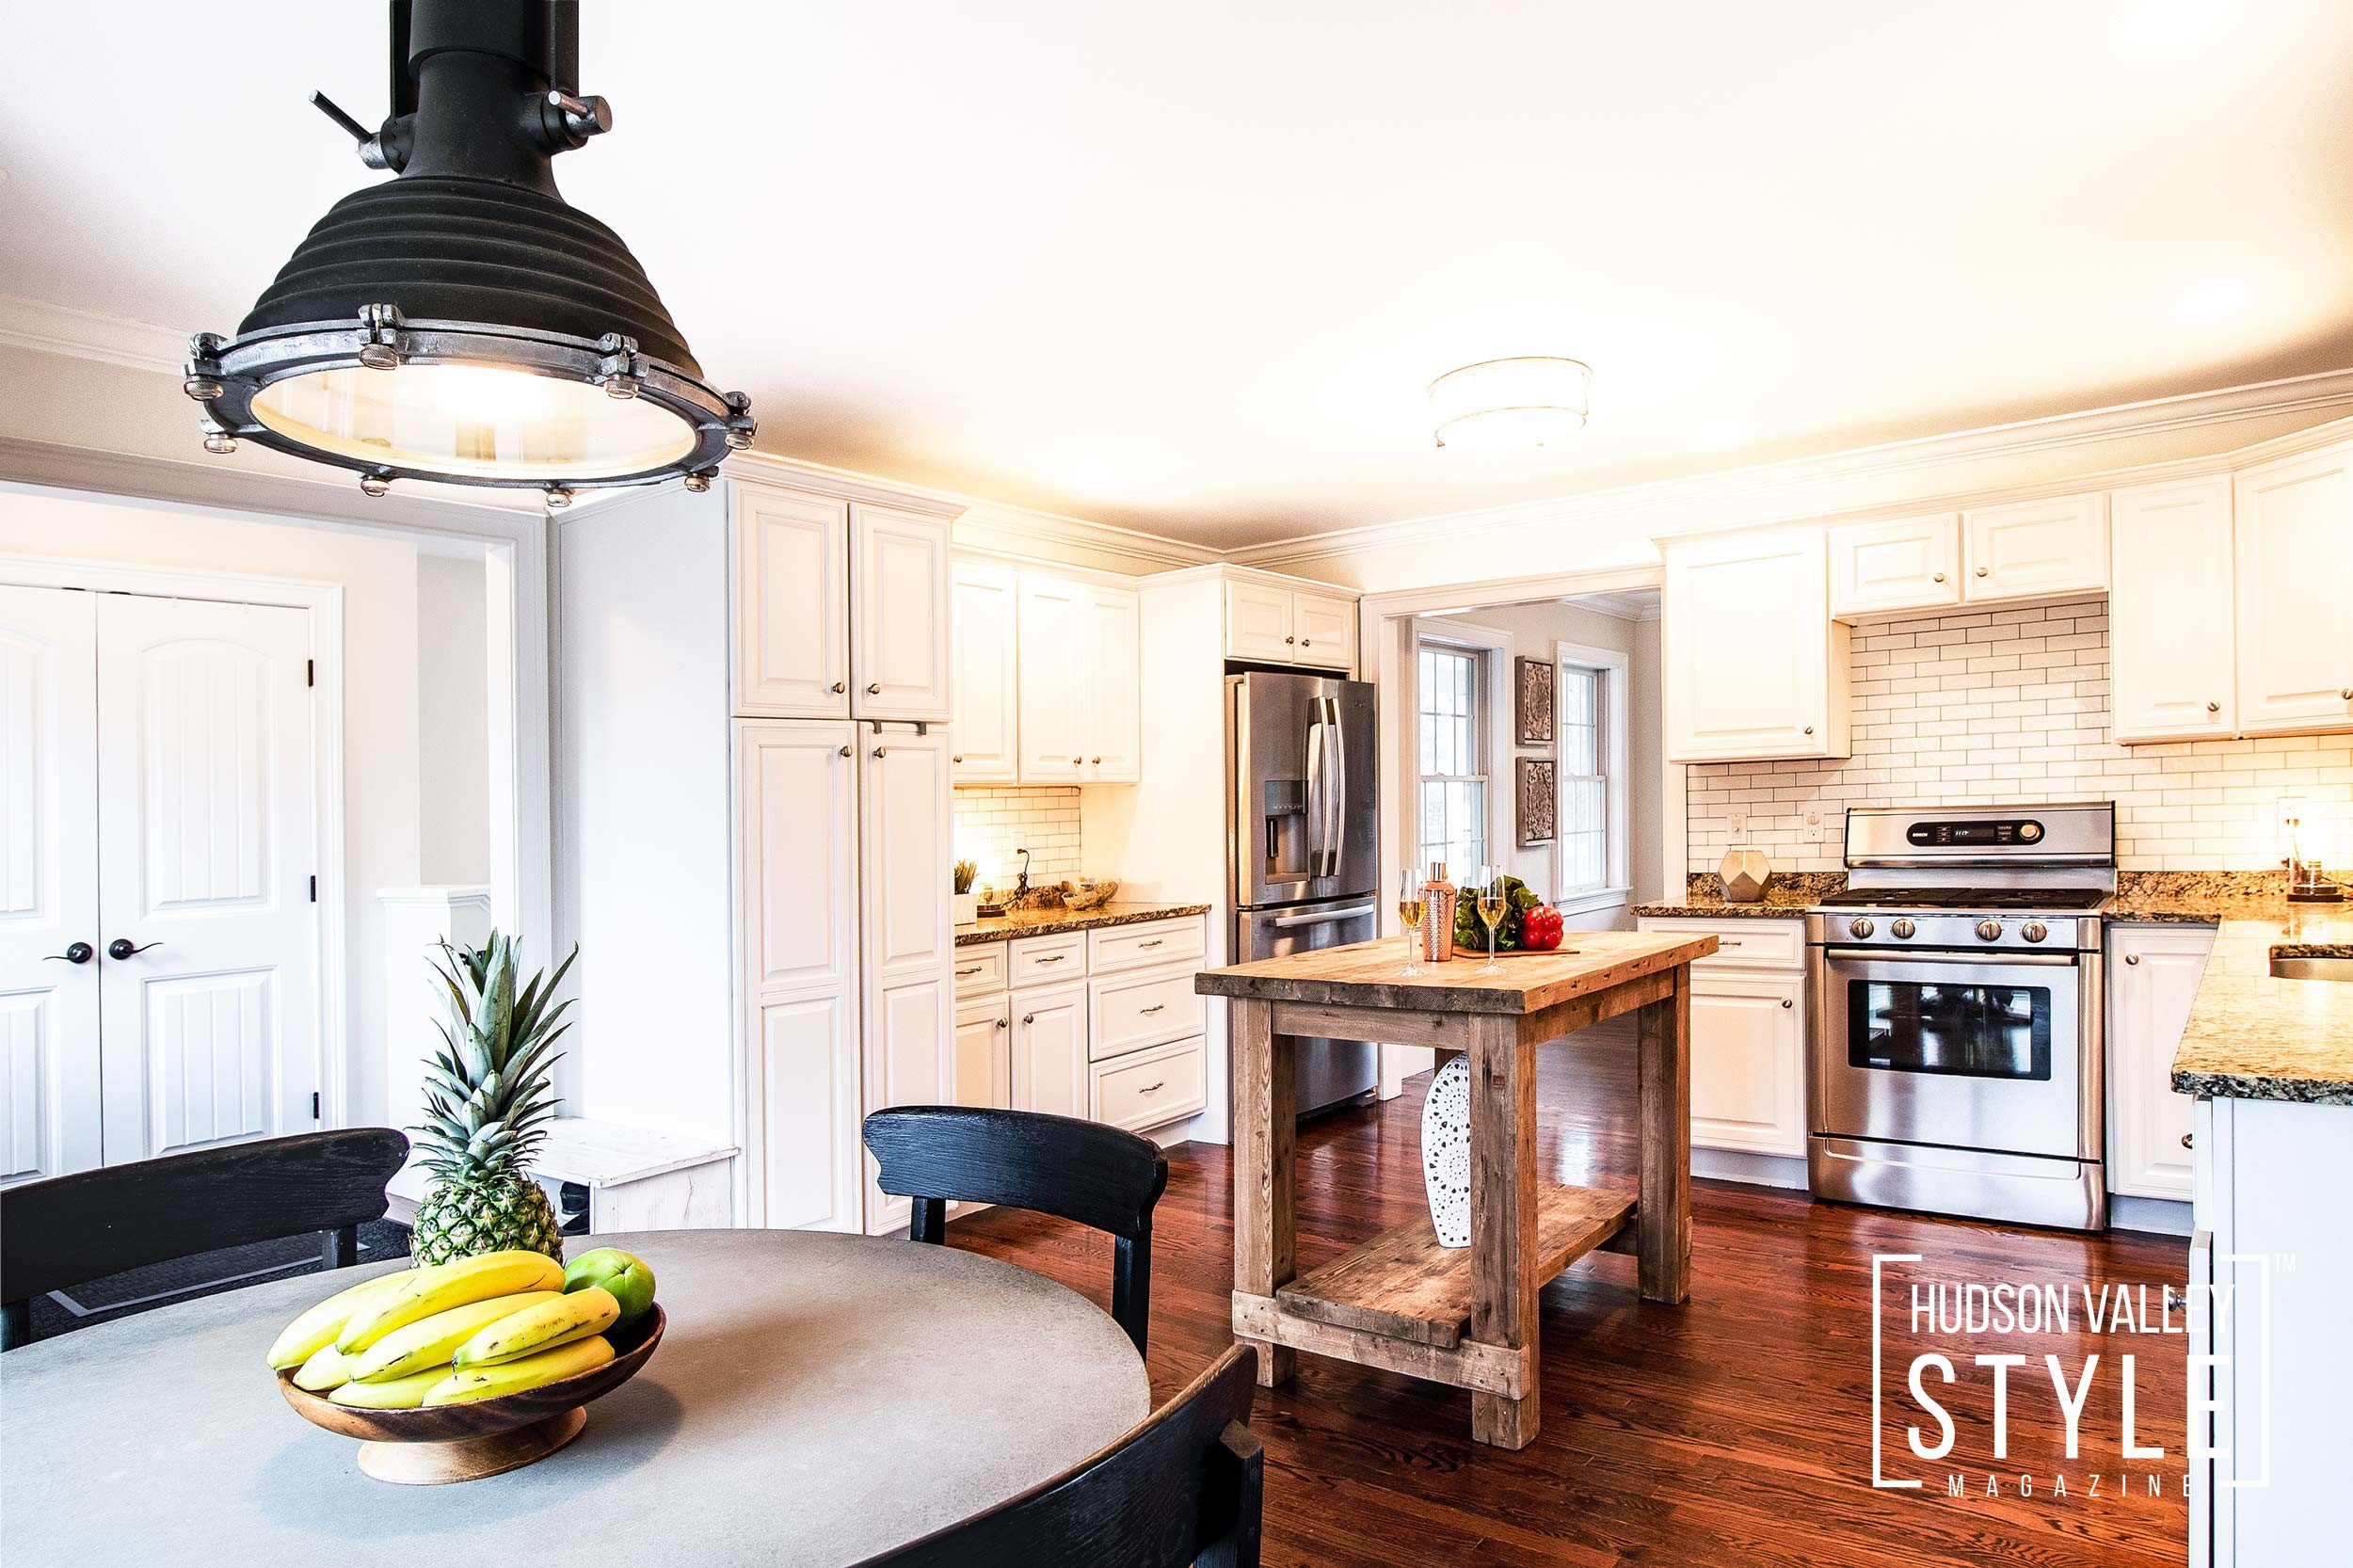 Modern Rustic Kitchen, Granite Countertops - Luxury Hudson Valley Home for Sale - Almax Realty - Hudson Valley's Best Realtors